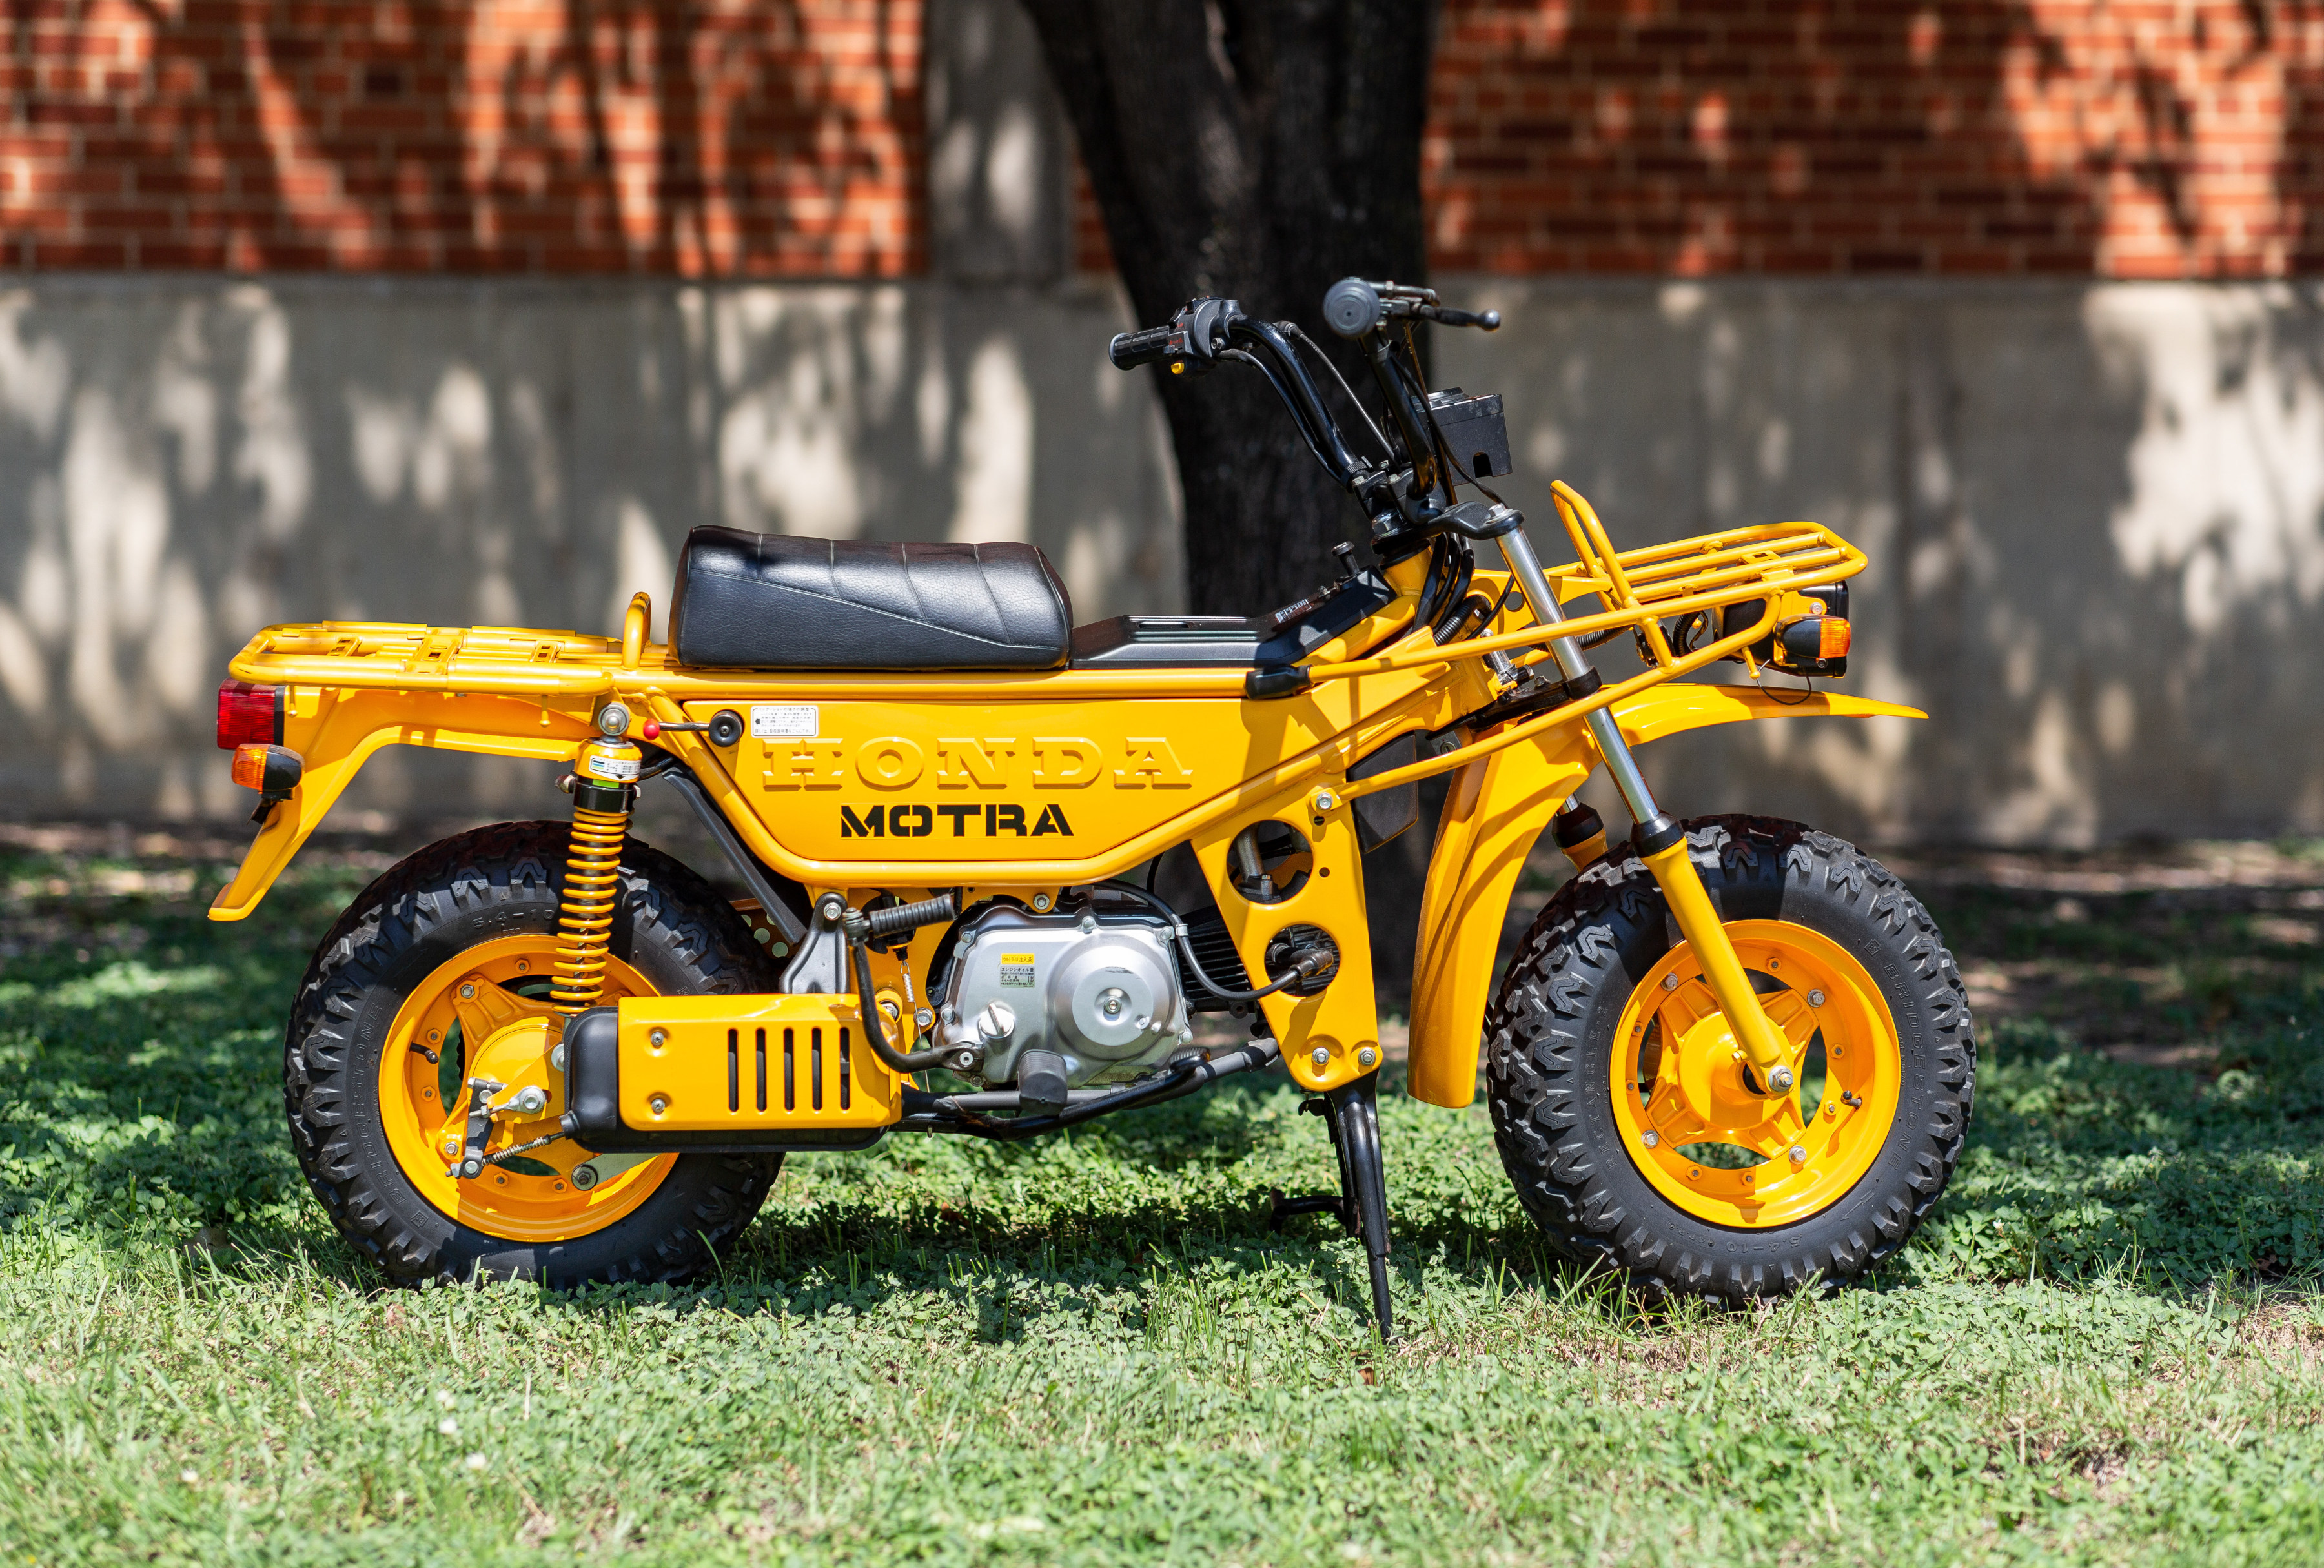 1982 Honda Motra CT50 -  - Viewing Room - Haas Moto Museum Blog